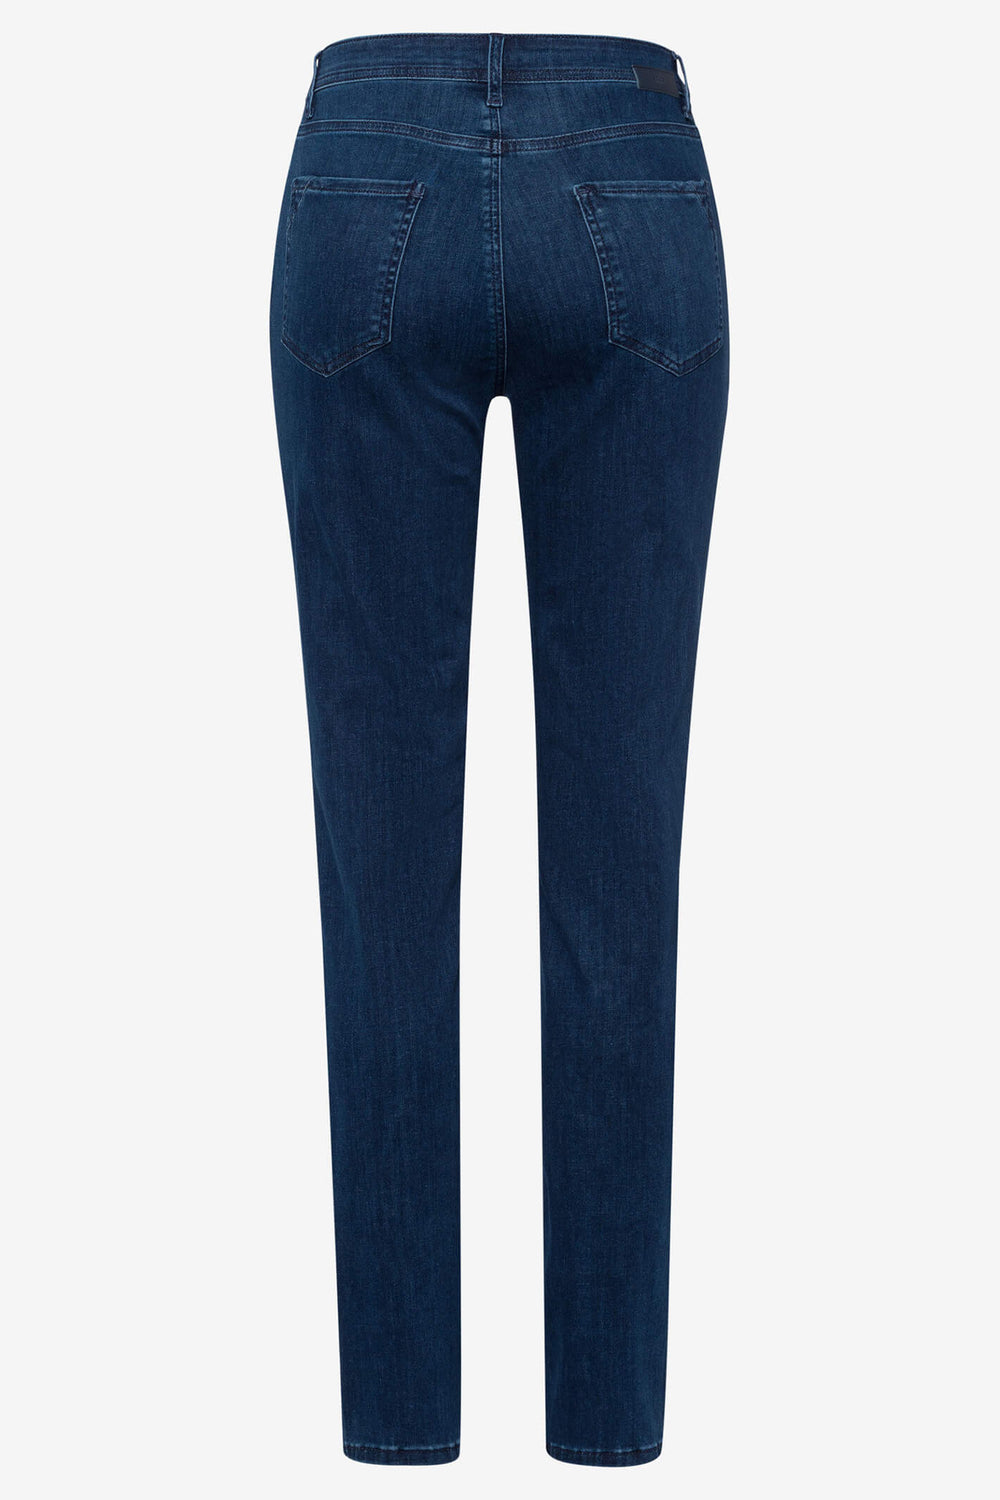 Brax Mary 707000 09928820 25 Used Regular Blue Five Pocket Jeans - Olivia Grace Fashion